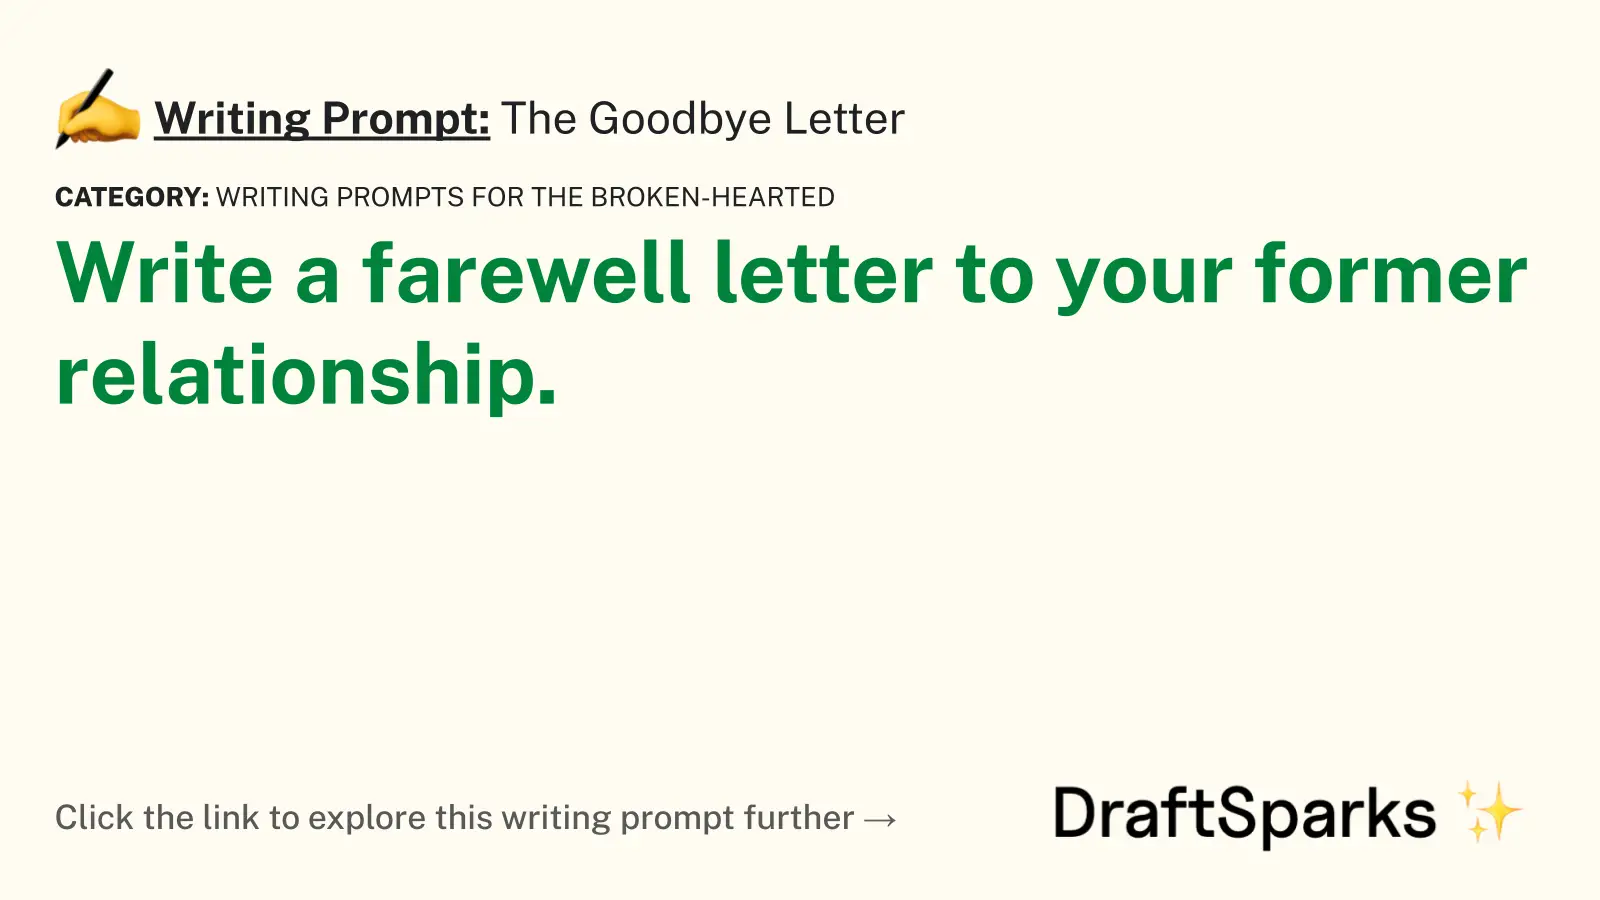 The Goodbye Letter